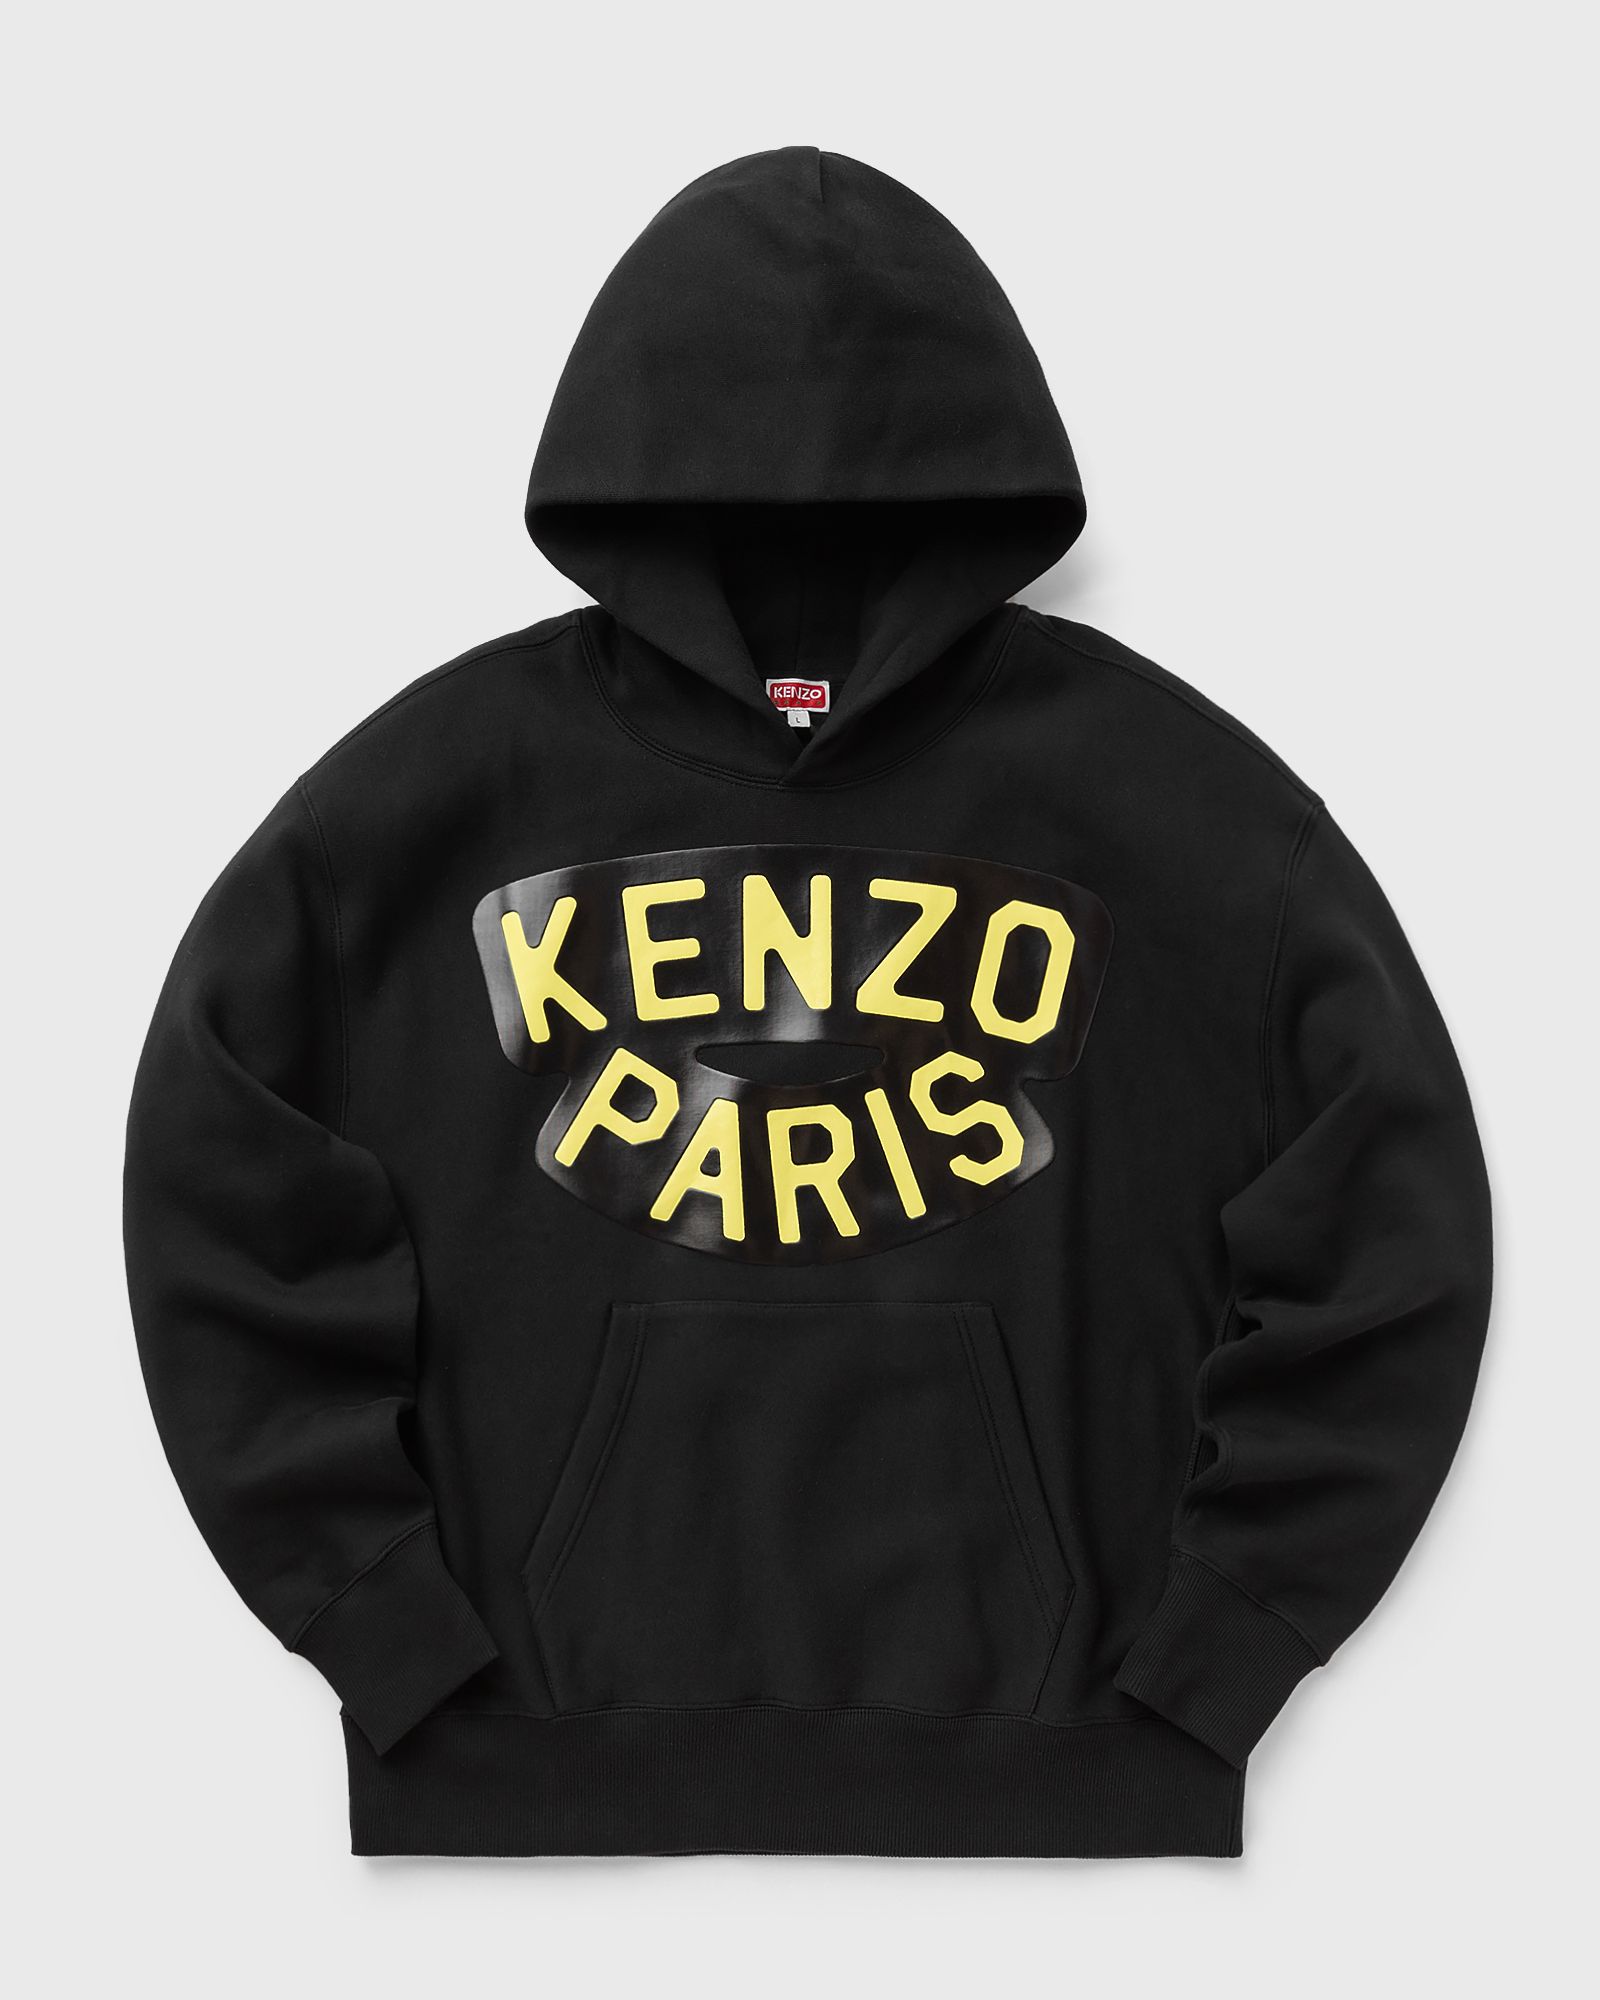 Kenzo - sailor oversize hoodie men hoodies black in größe:s